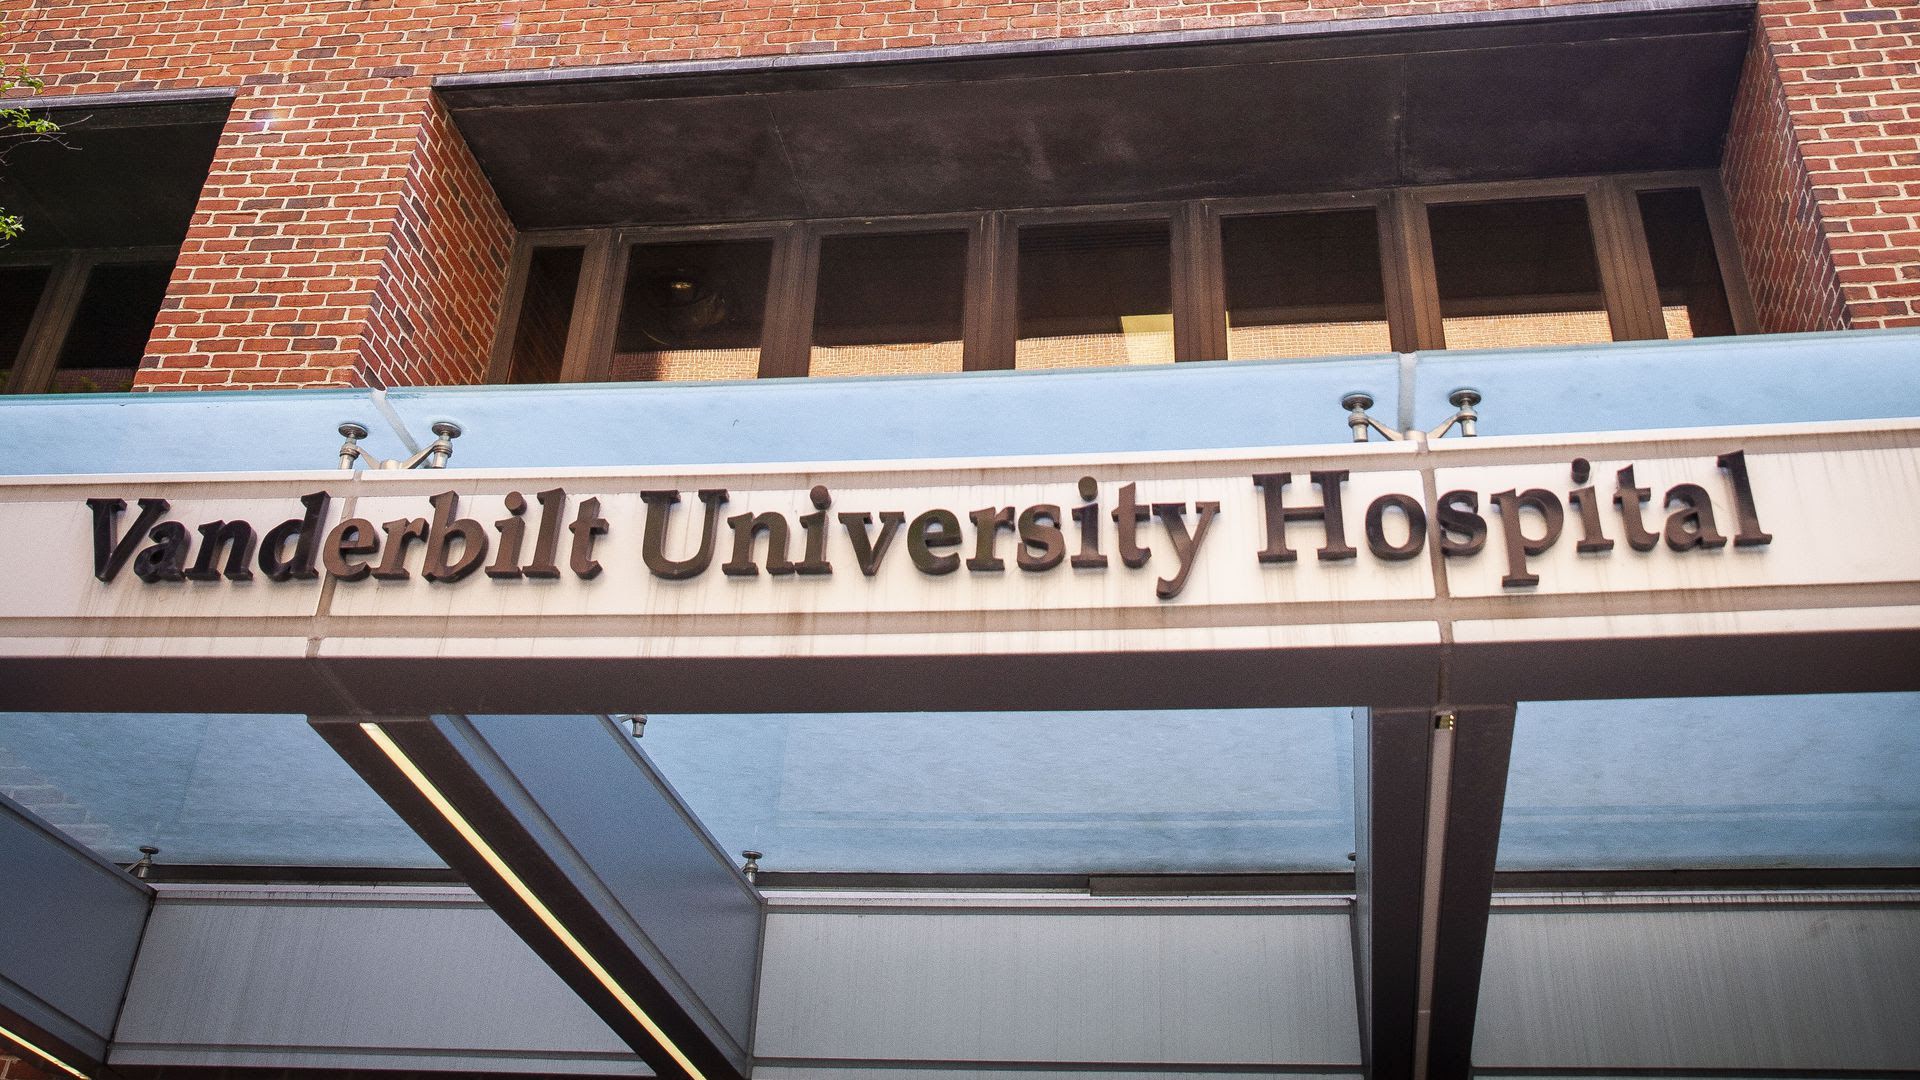 The front sign of the Vanderbilt University Medical Center.